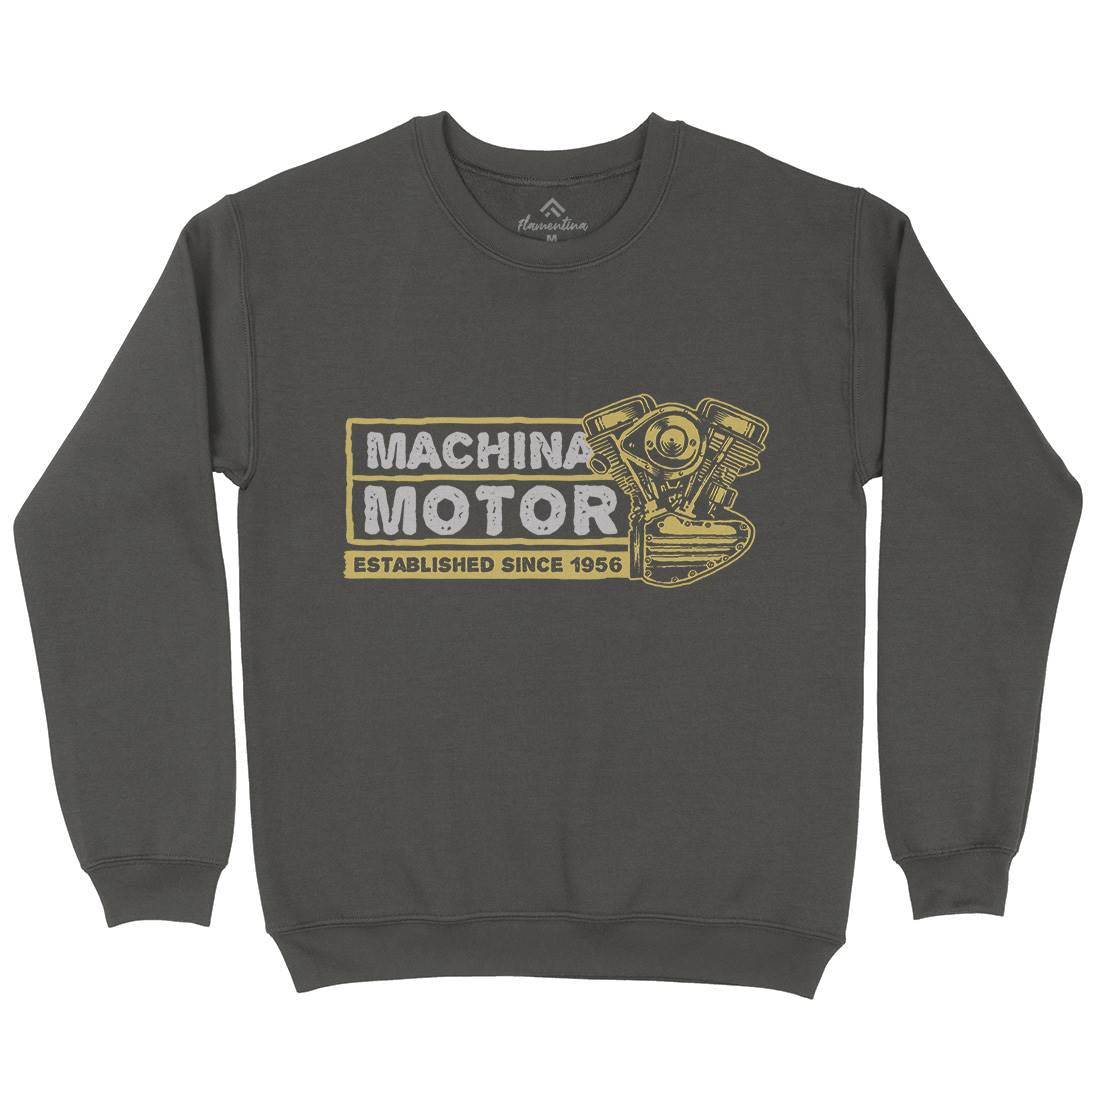 Machina Motor Kids Crew Neck Sweatshirt Motorcycles A340